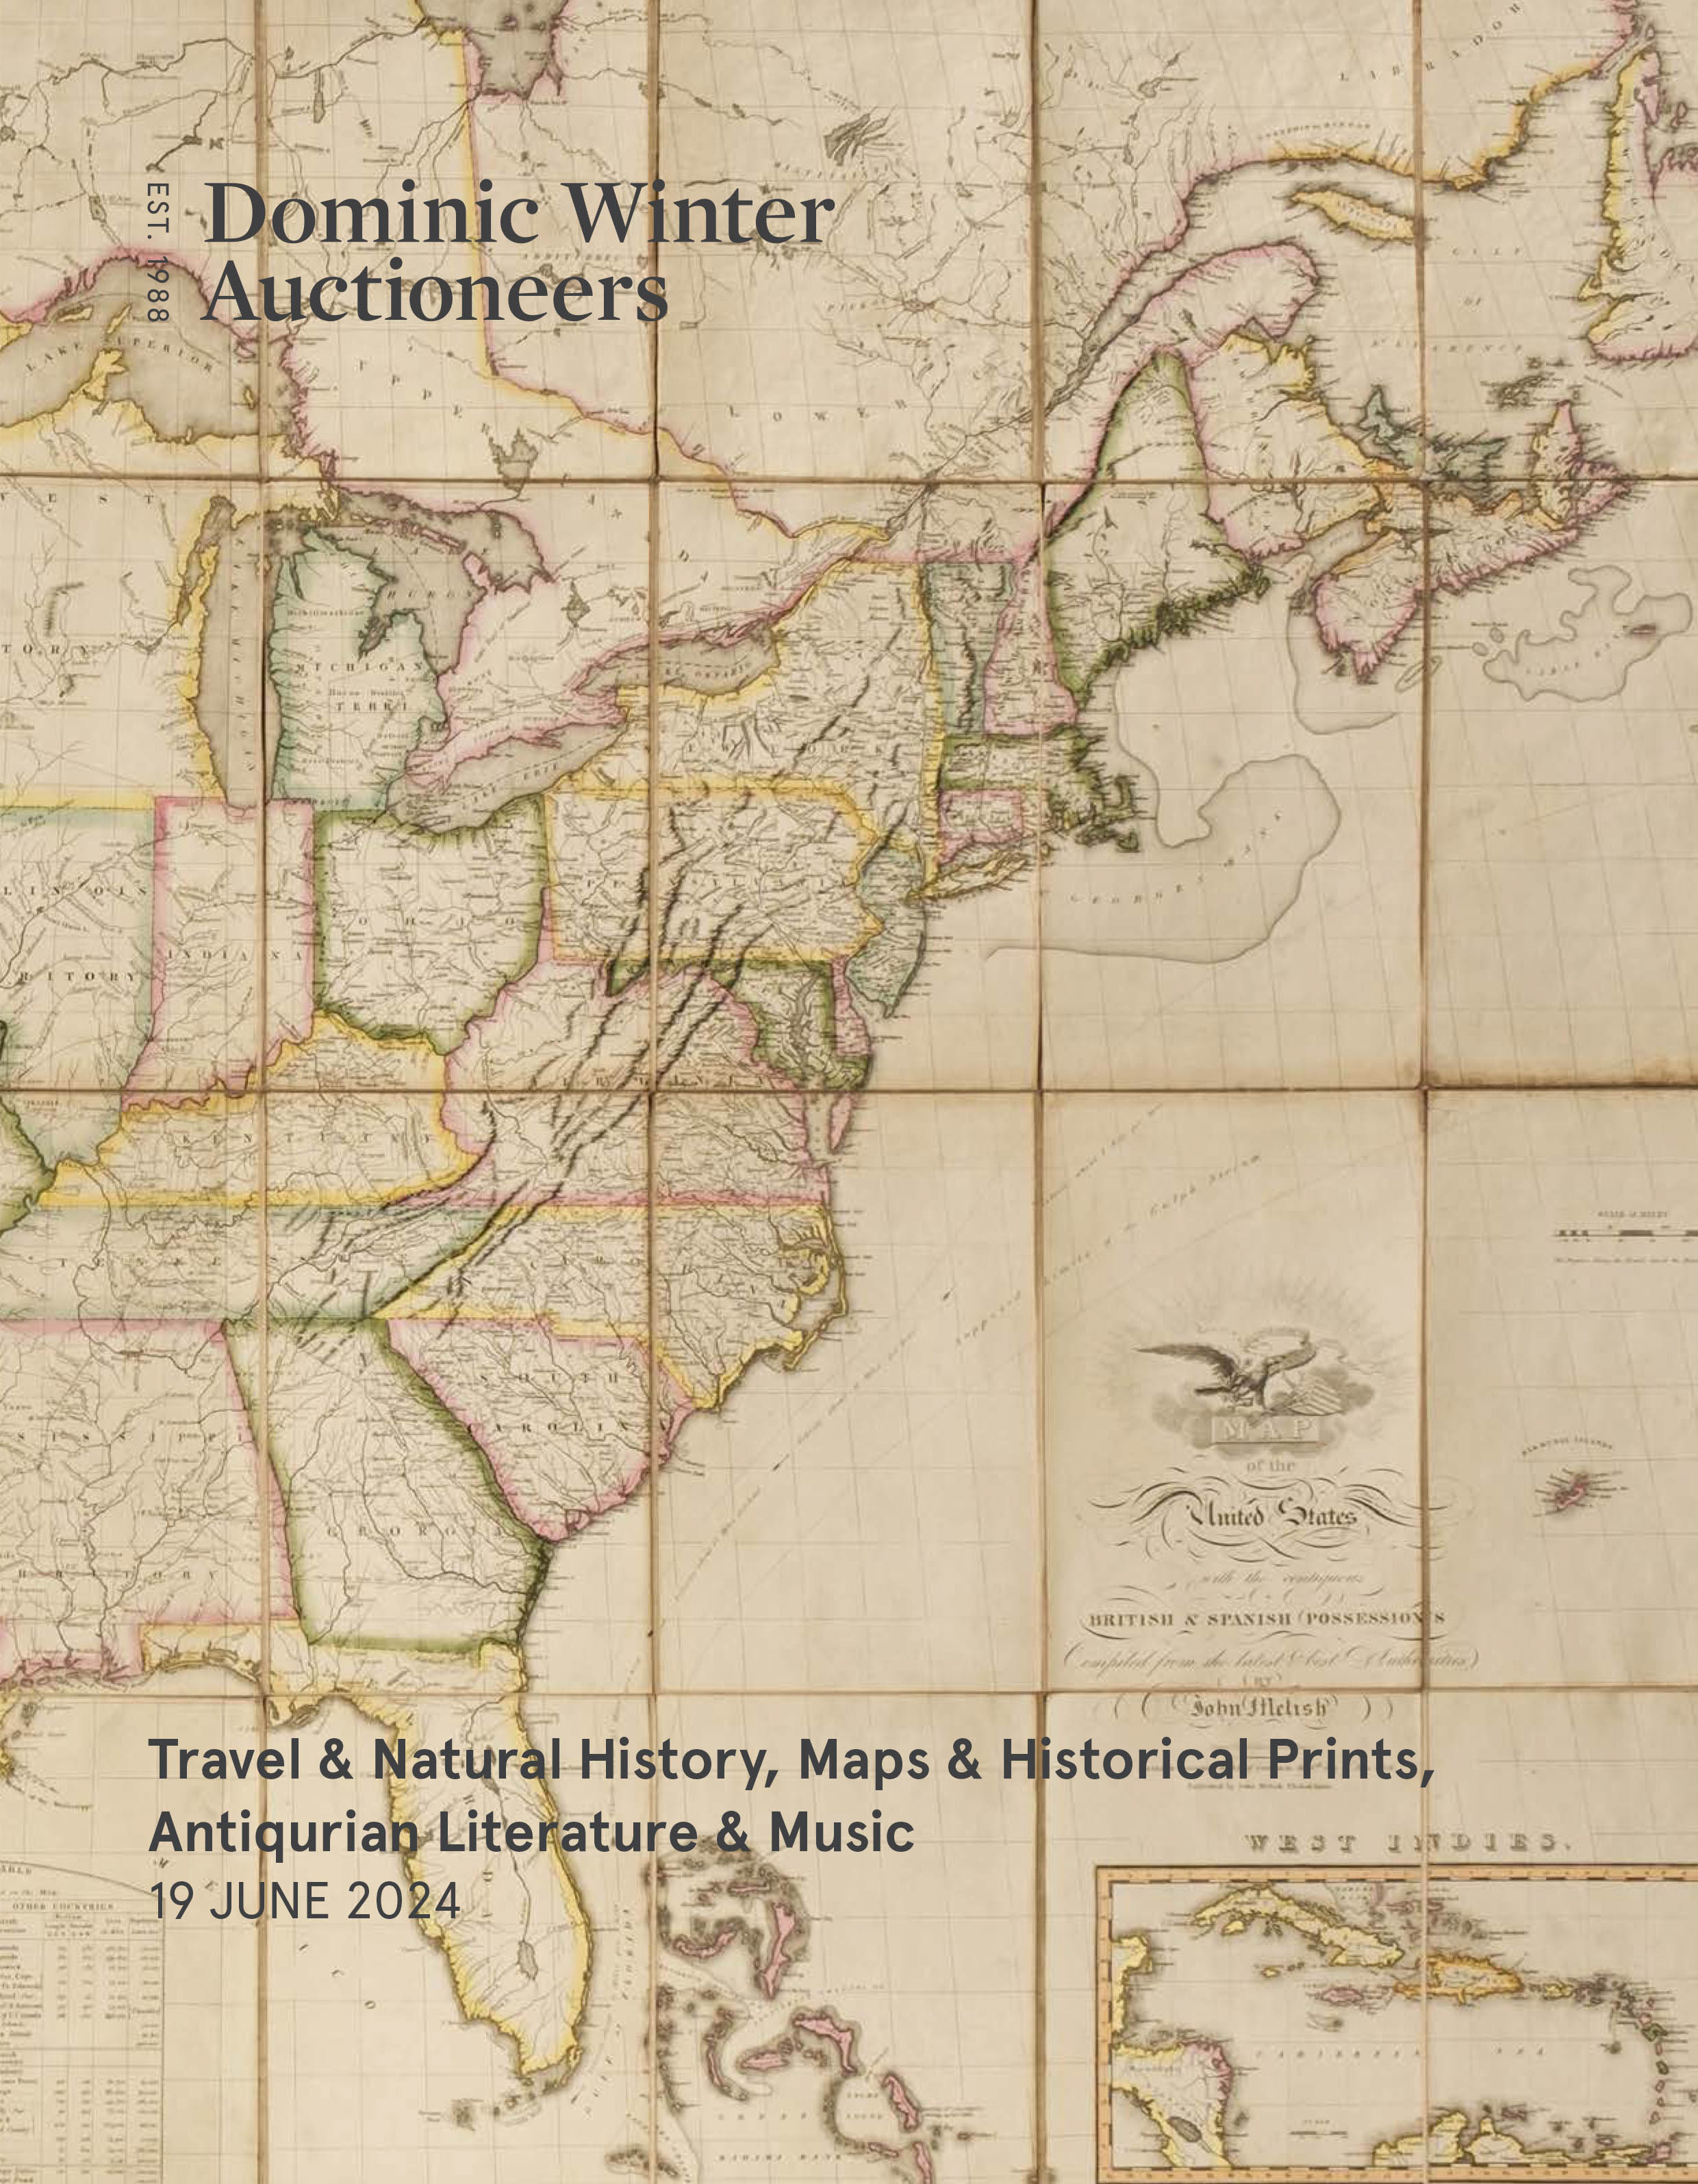 Travel & Natural History, Maps & Historical Prints, Antiquarian Literature & Music